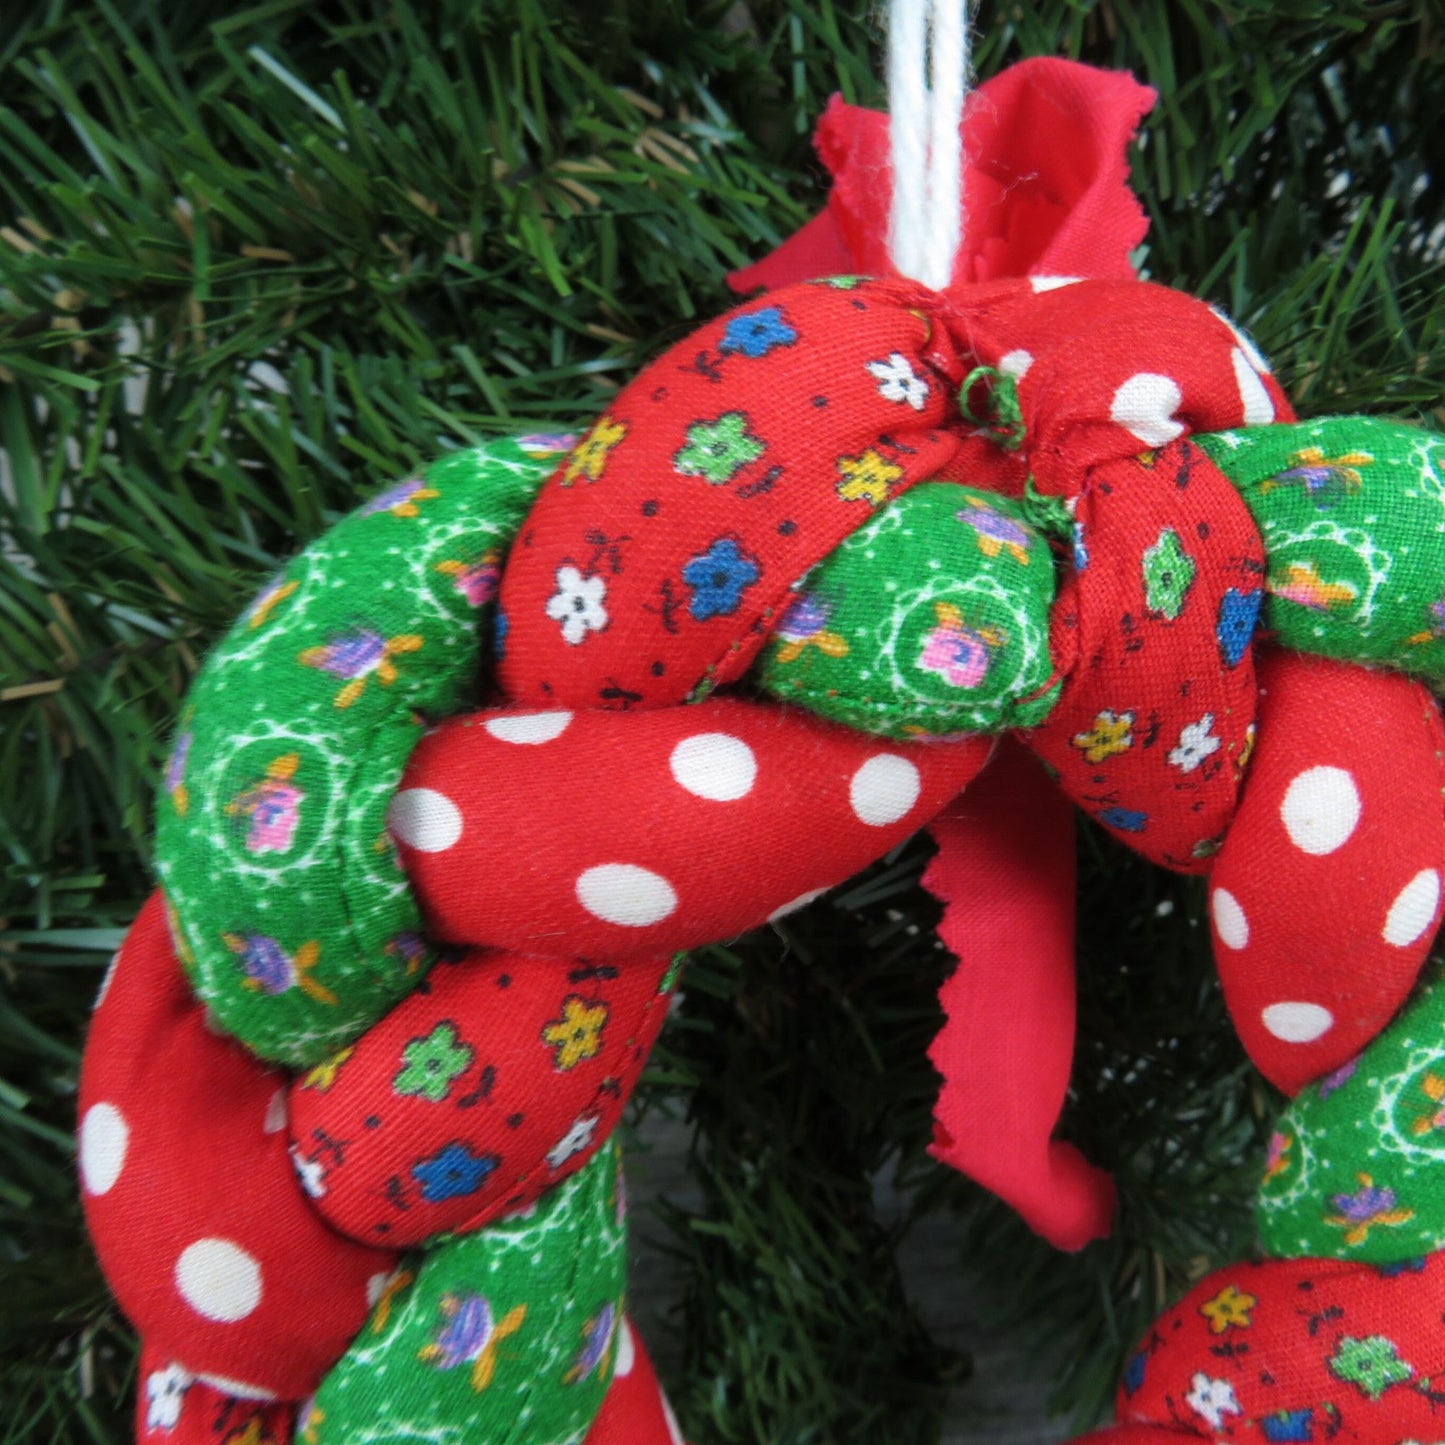 Vintage Fabric Christmas Wreath Ornament Twisted Handmade Red Green Santa Flowers